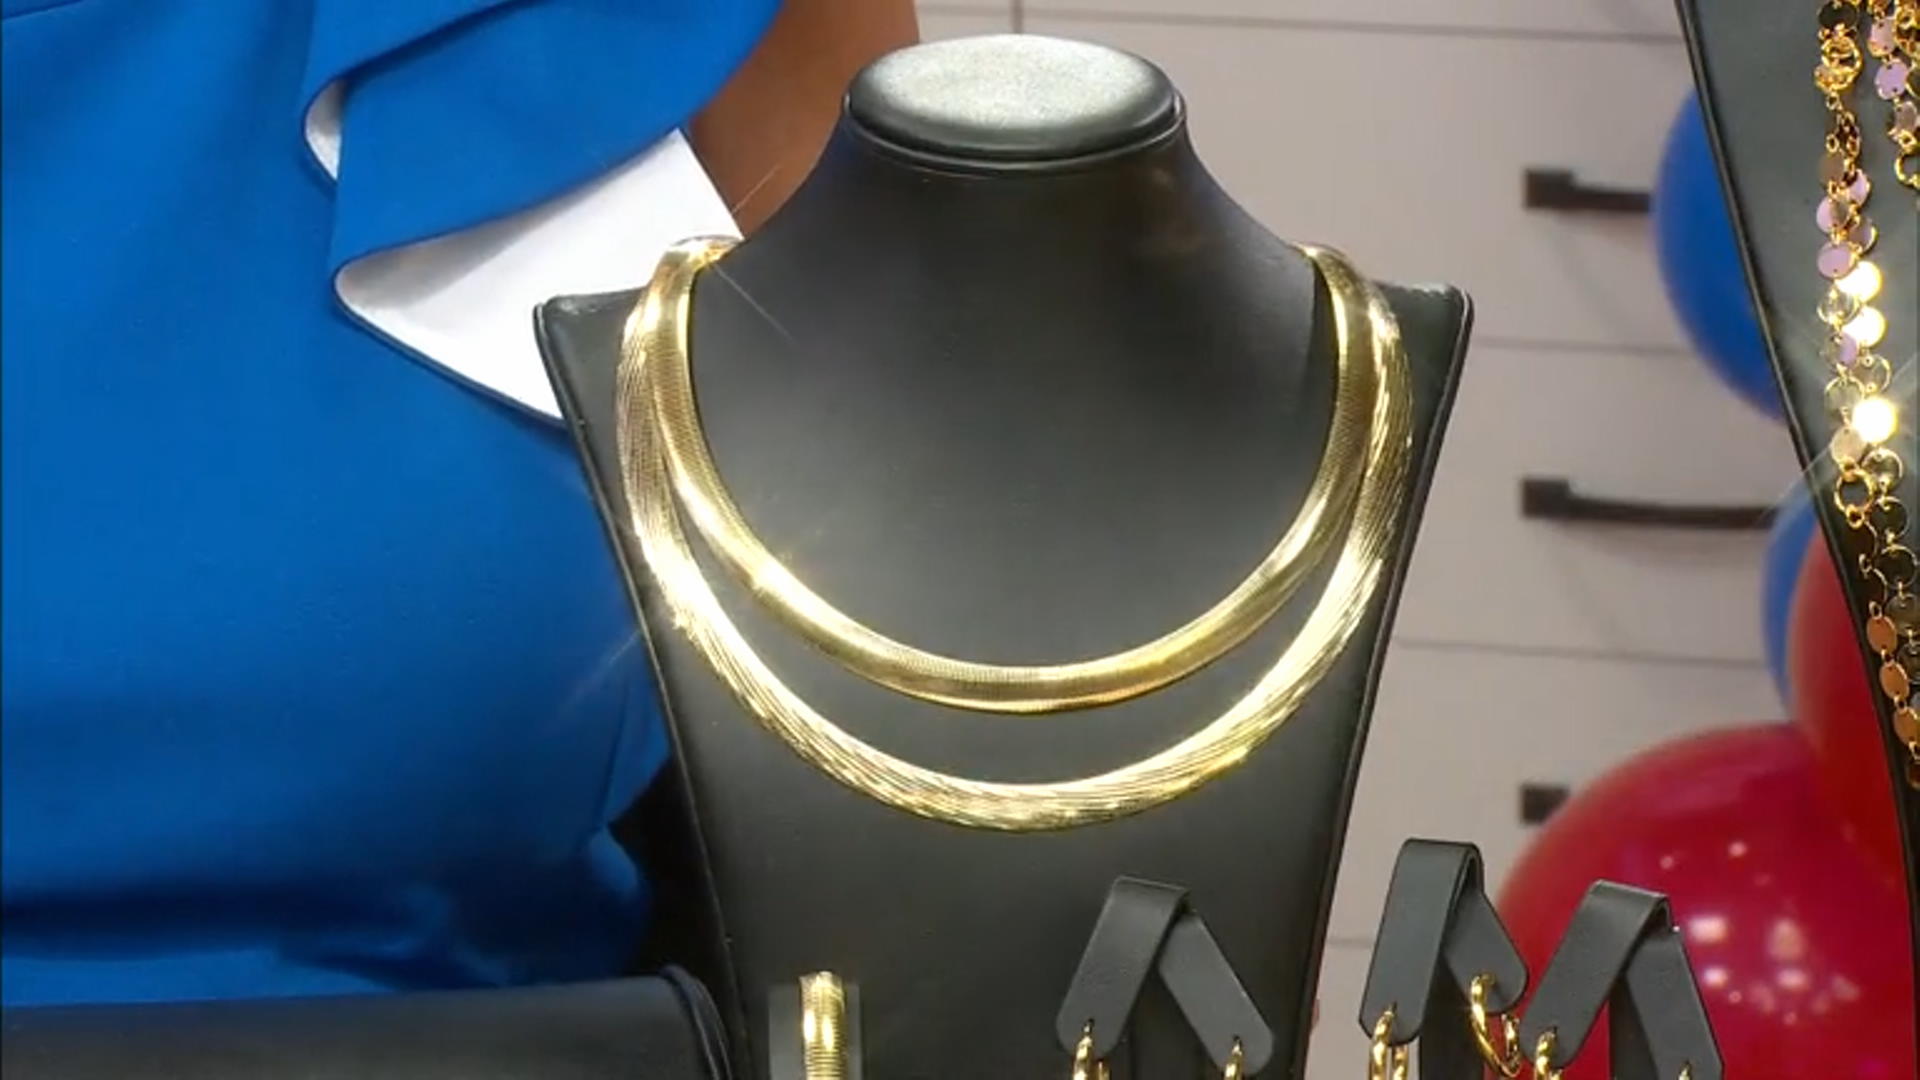 Moda Al Massimo 18k Yellow Gold Over Bronze Necklace Video Thumbnail